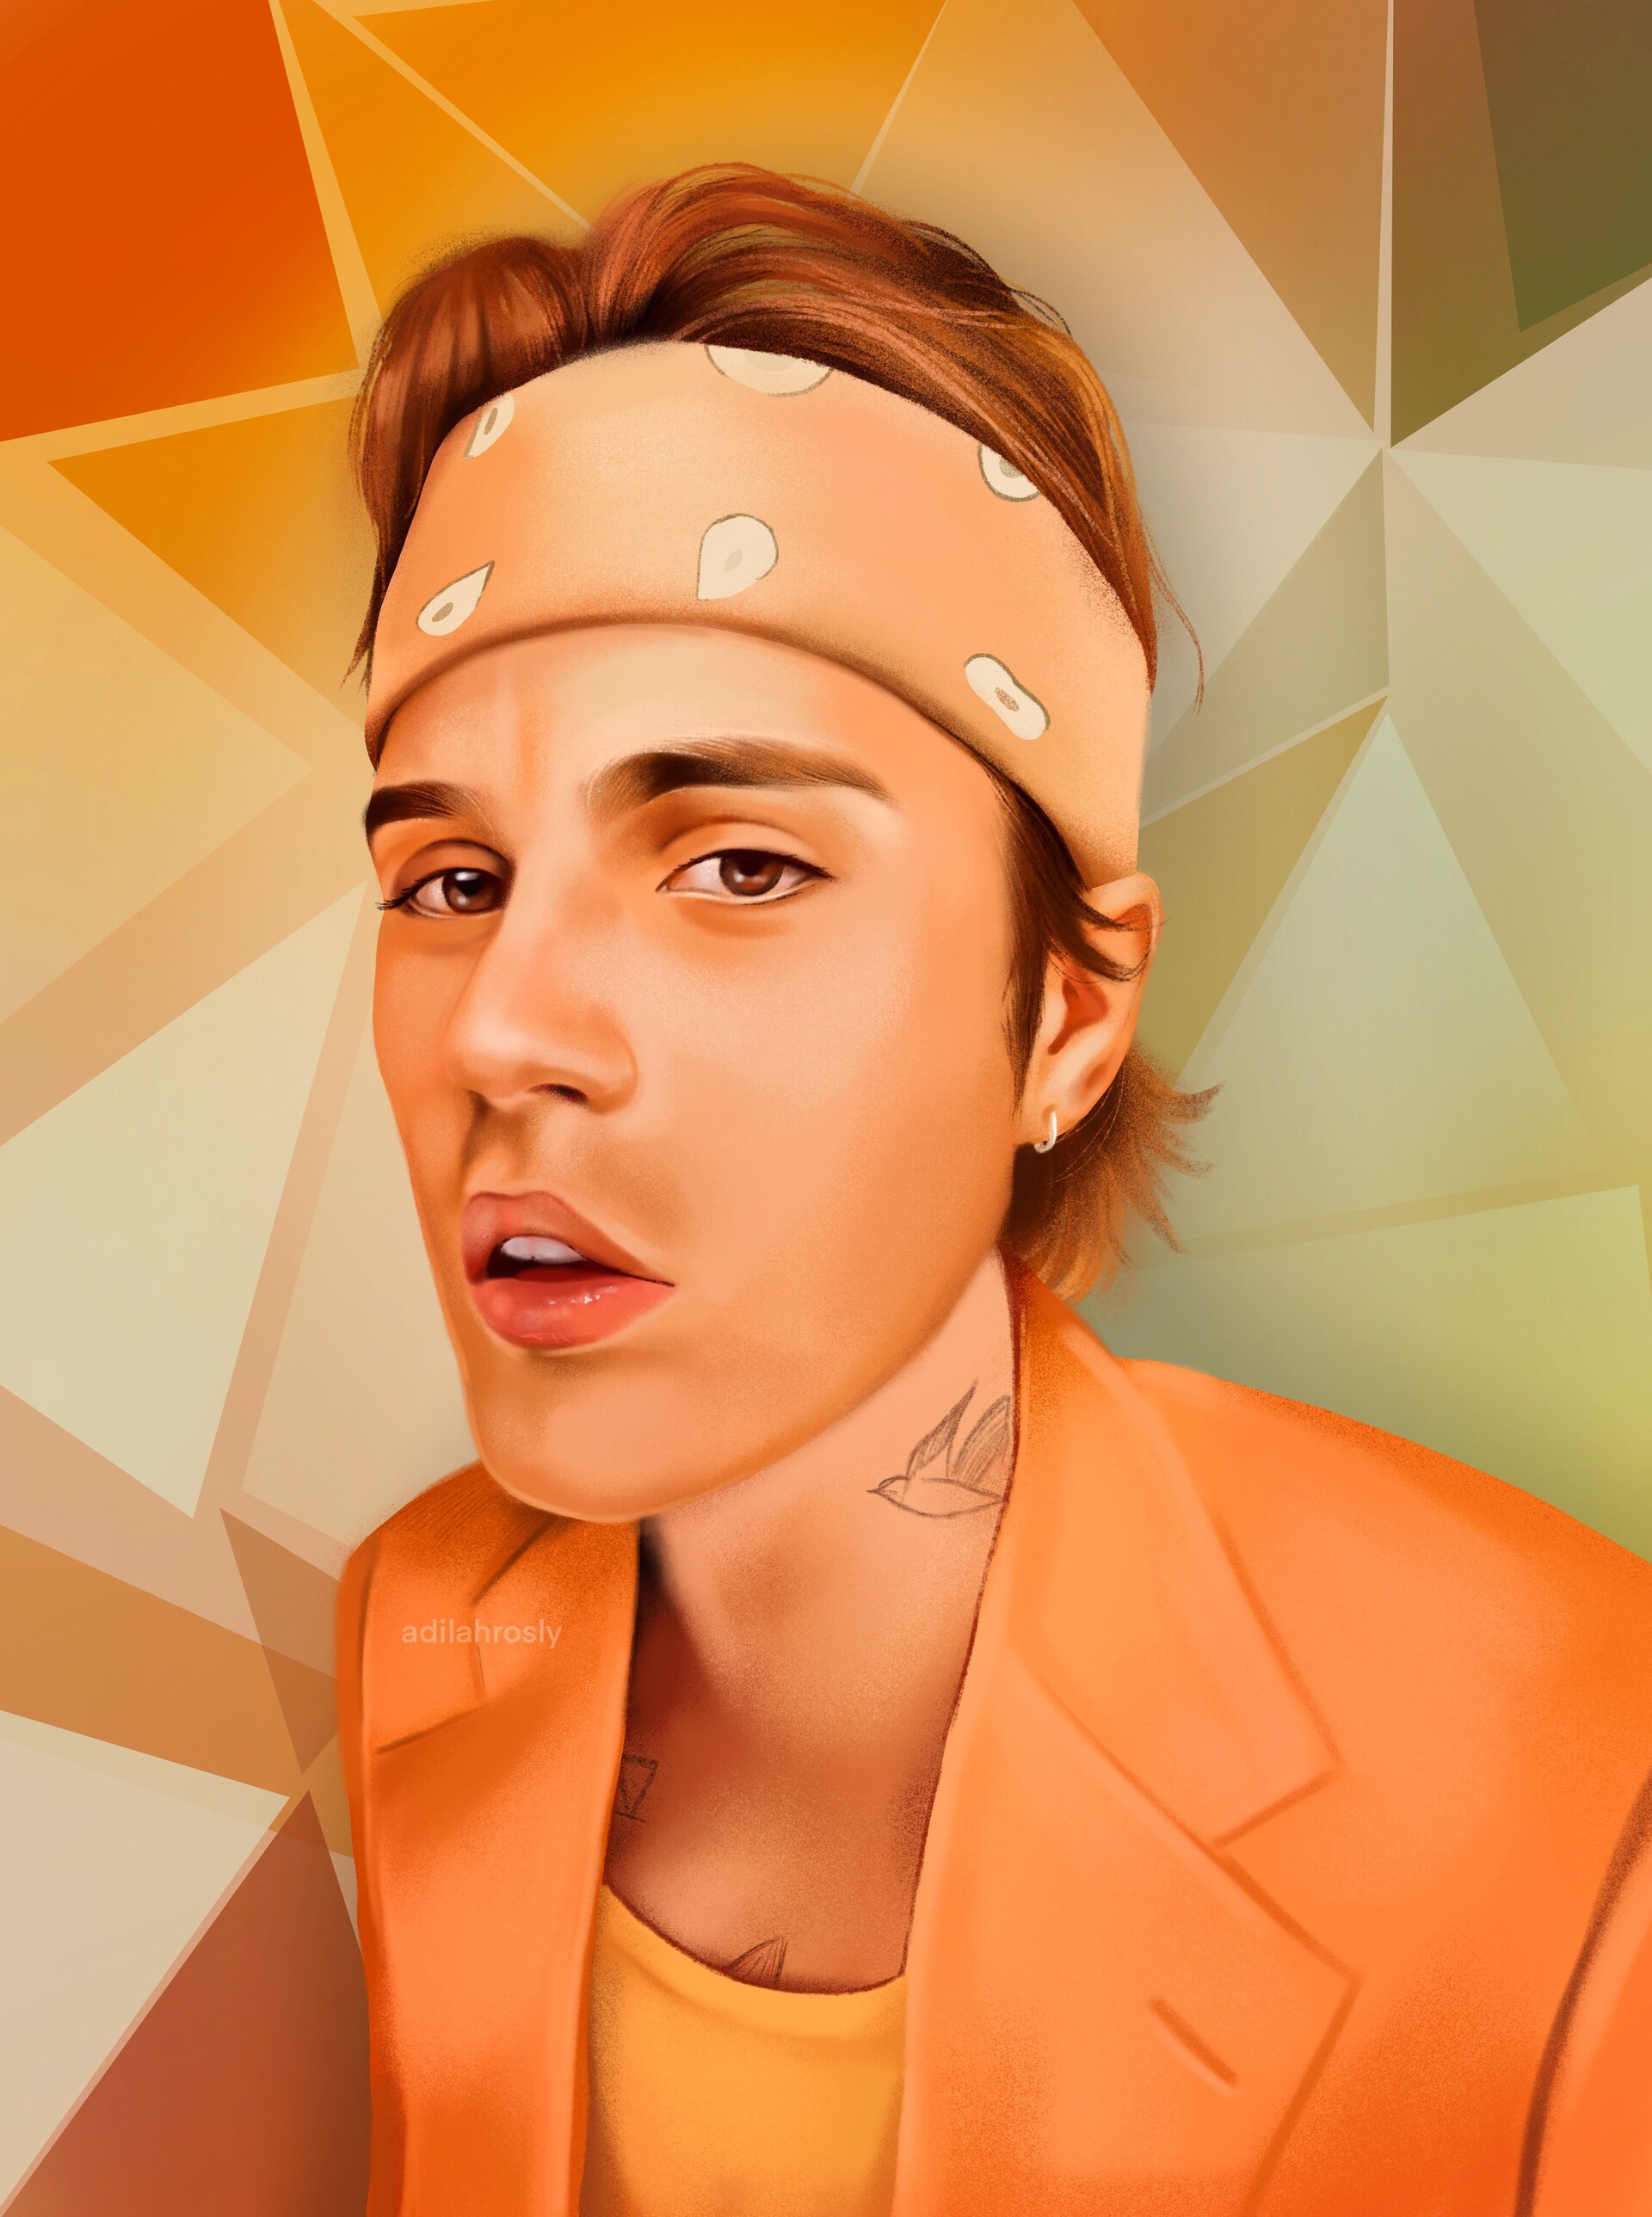 Jonathan Wood pencil drawing - Justin Bieber